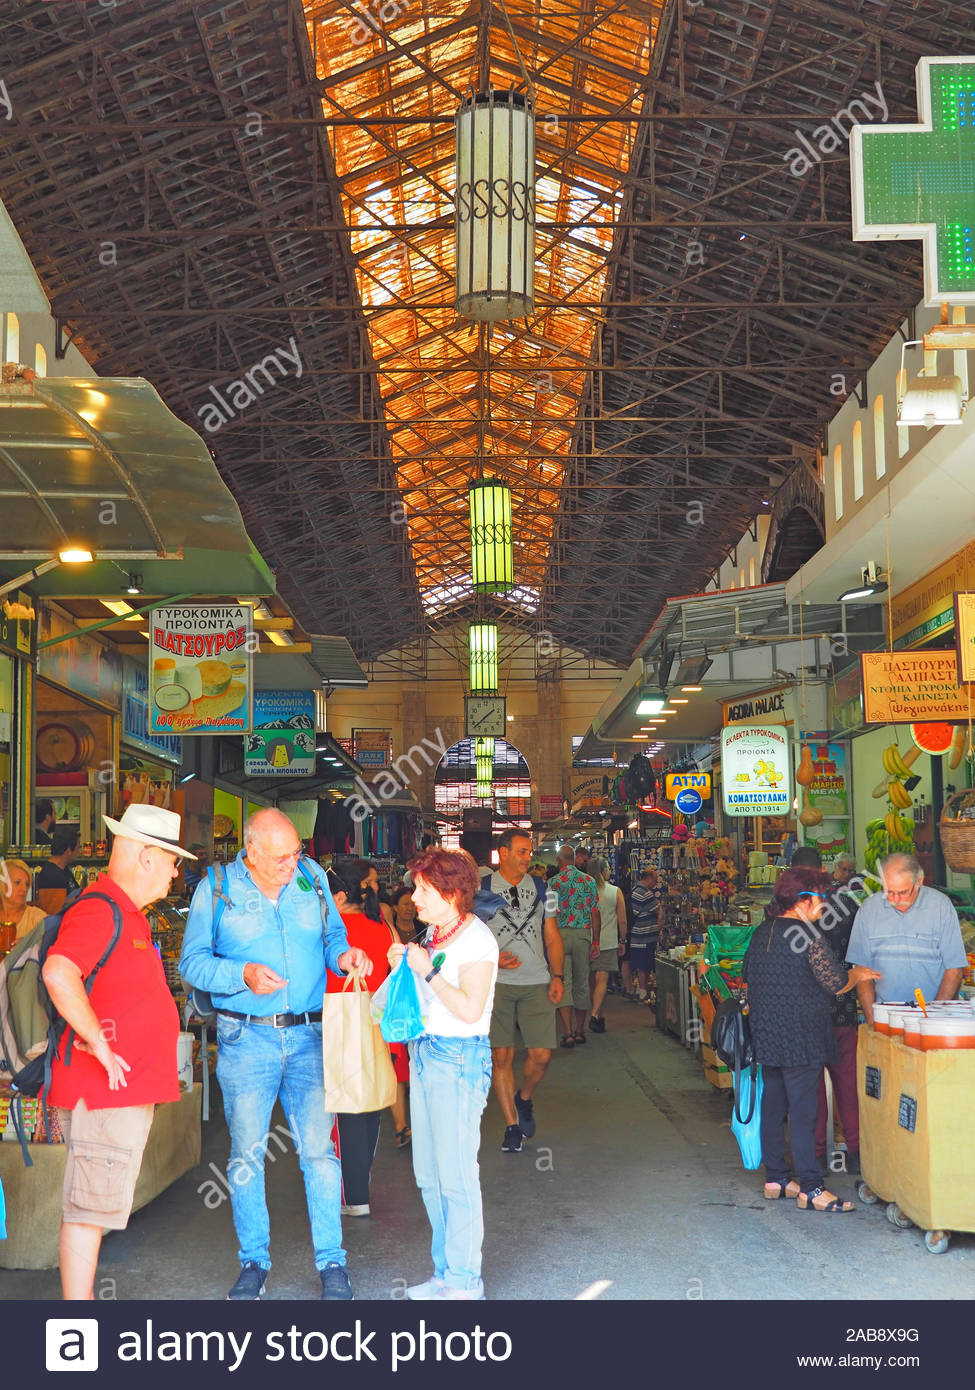 interior of agora covered market of chania, crete greece Stock ...